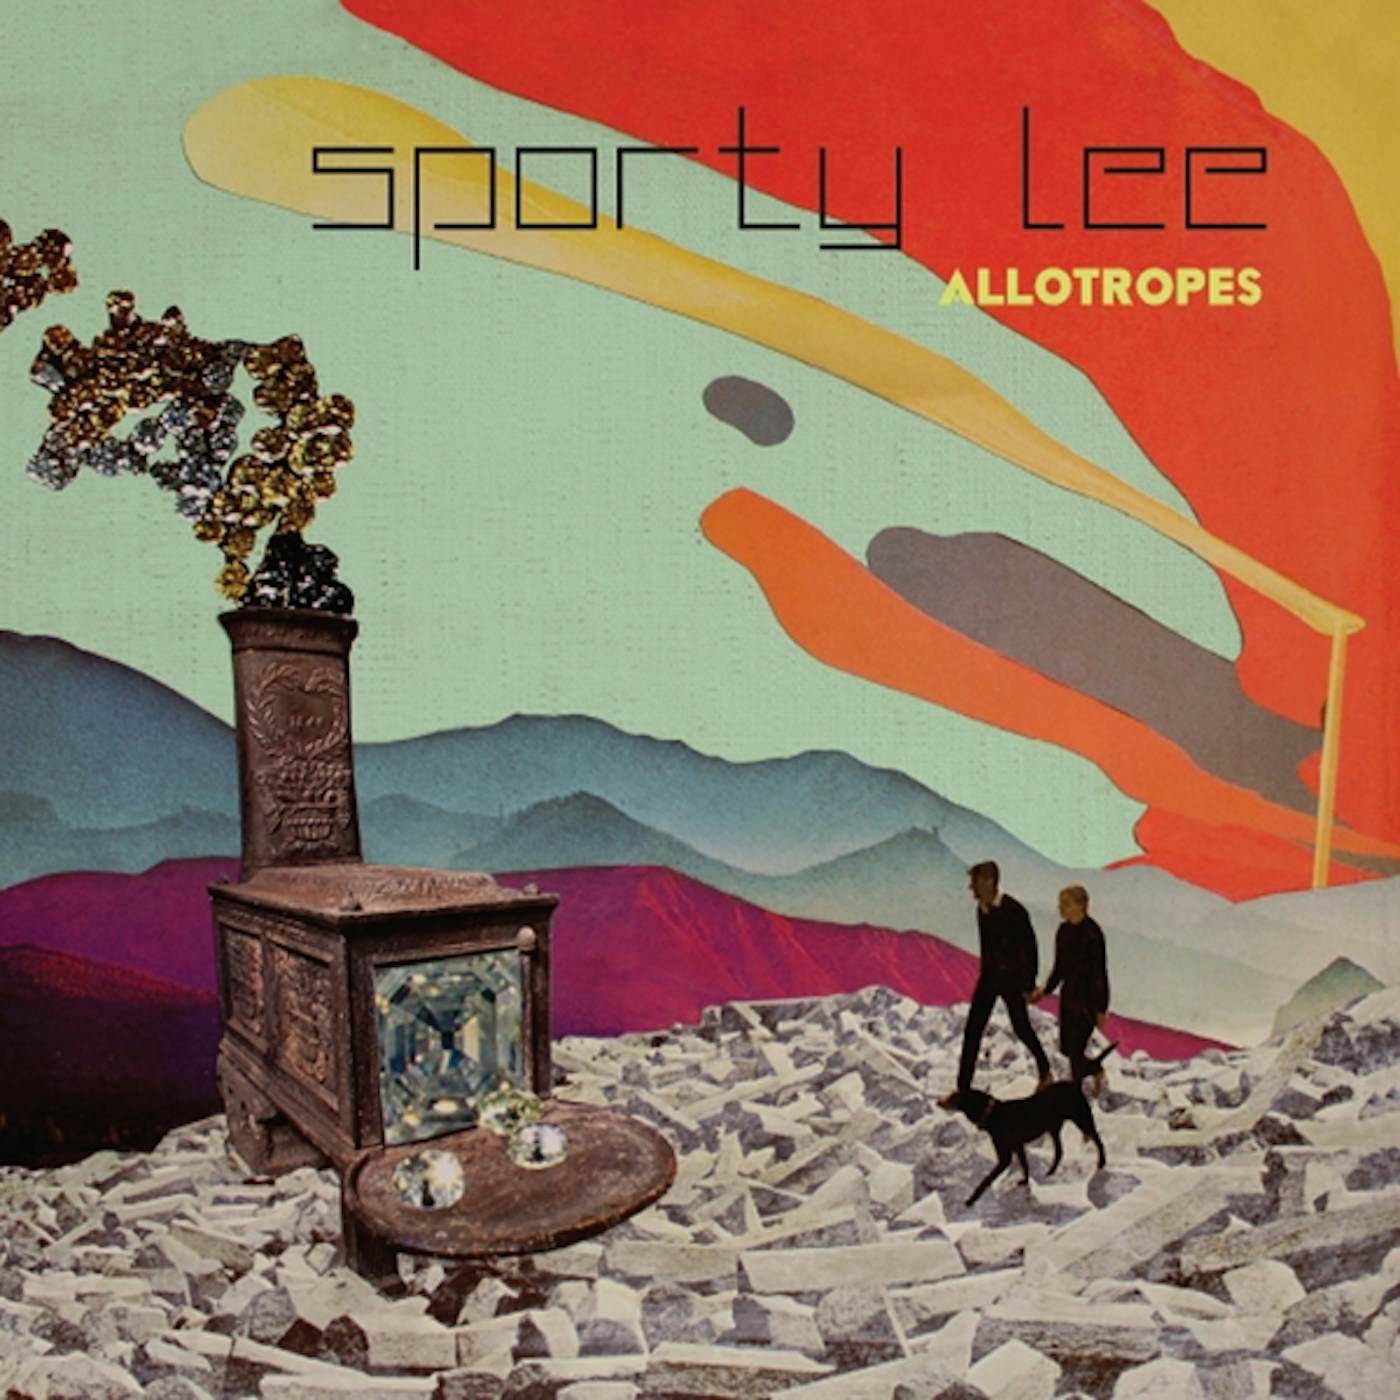 Sporty Lee ALLOTROPES CD